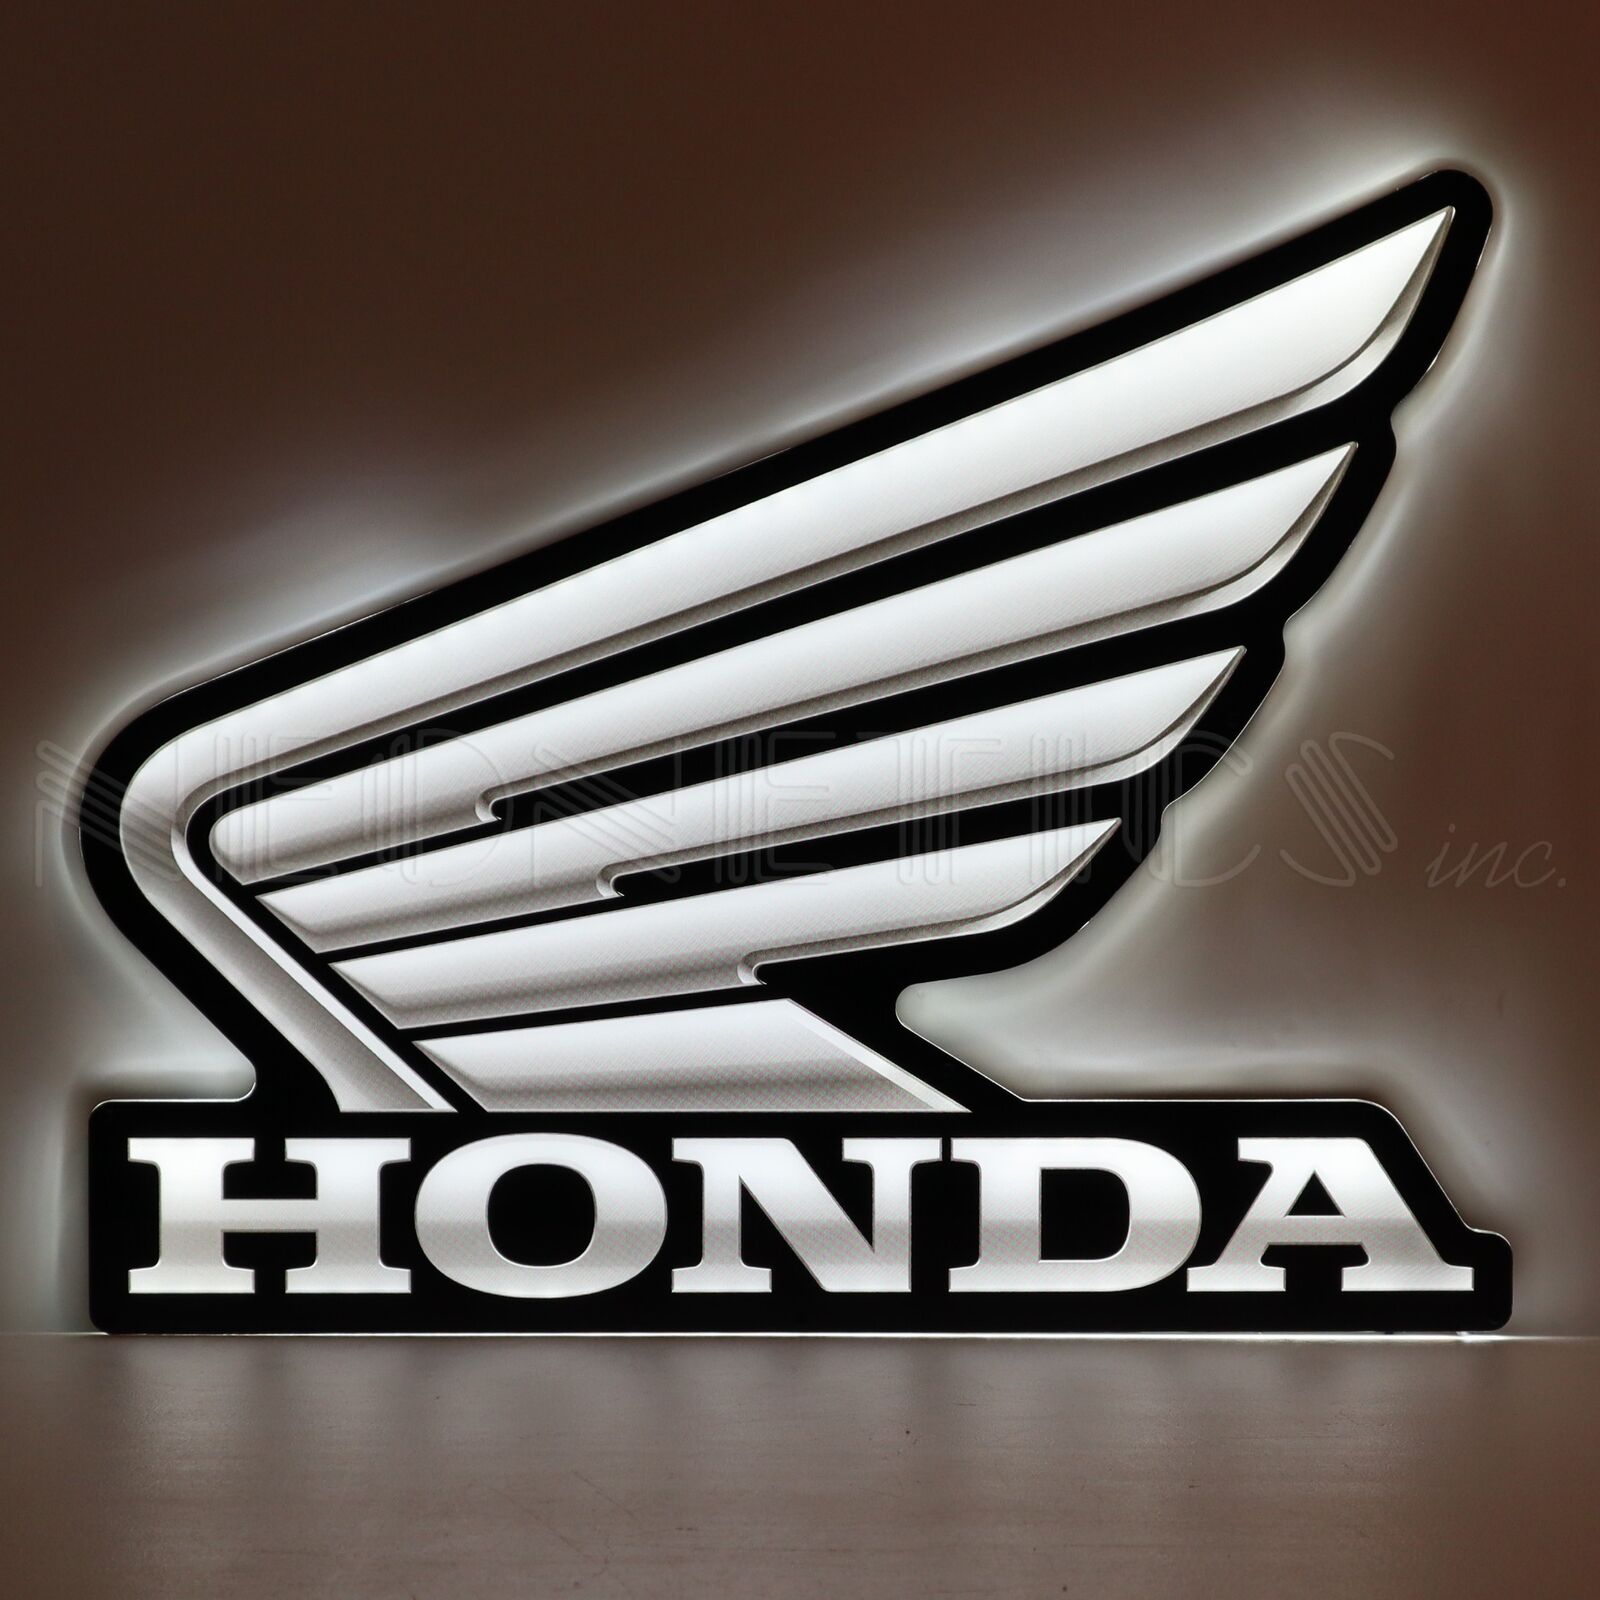 Honda Neon Sign Wing Slim Led 24 Inches Licensed Car Dealer Neon Light